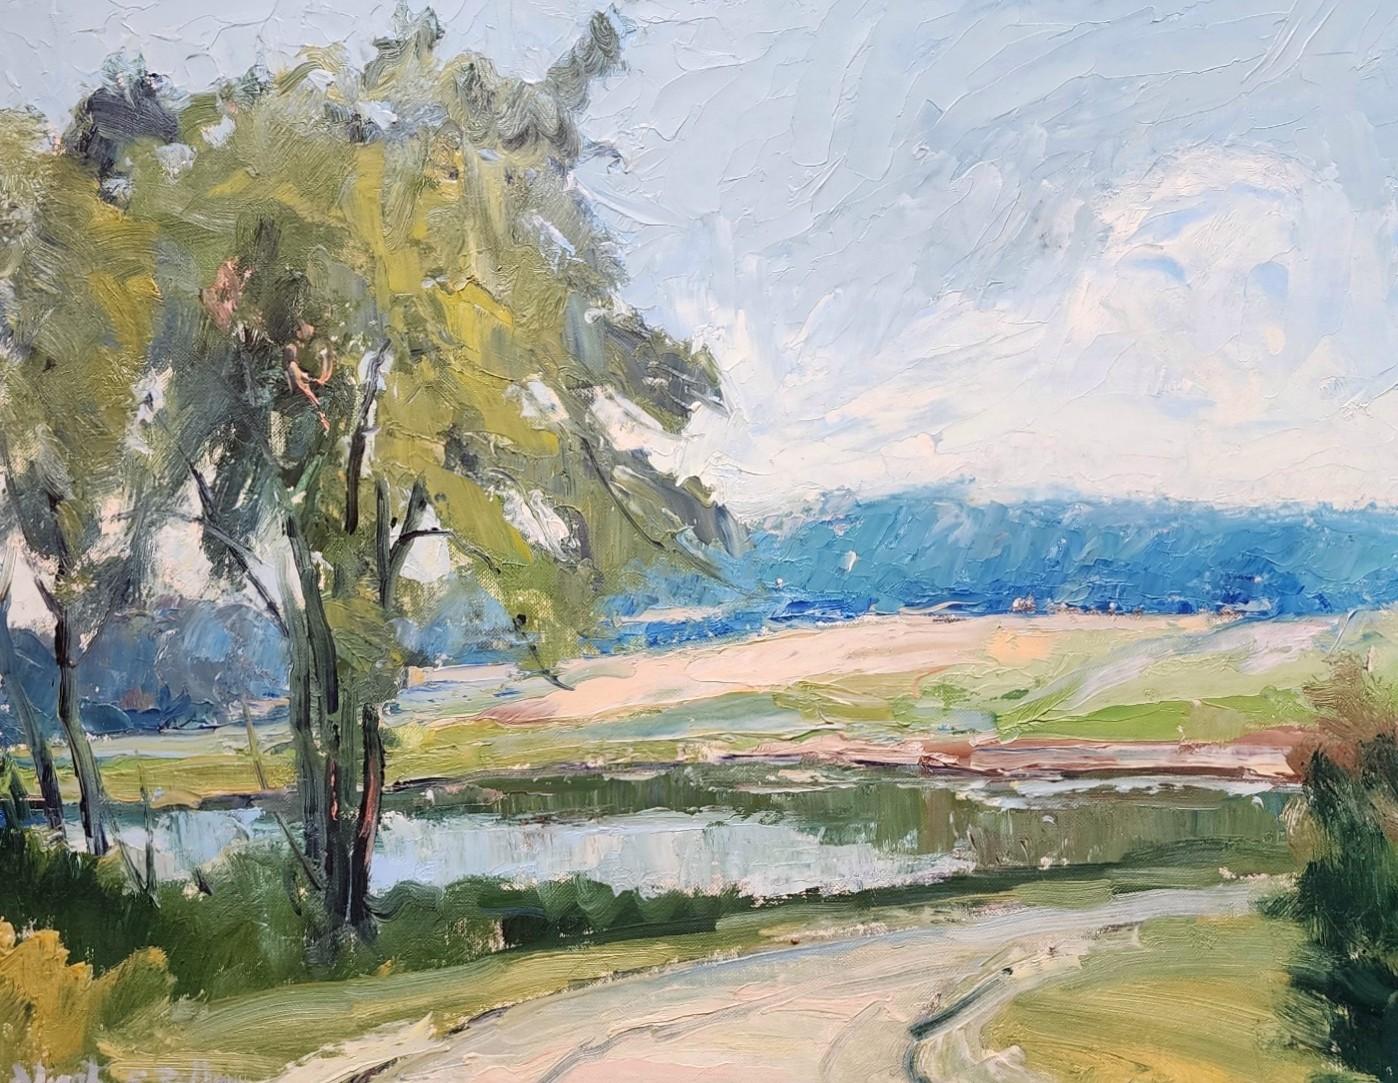 The Pond, Godfrey's Pond, Batavia, New York, Stafford, American Landscape - Painting by Stuart E. Zillman